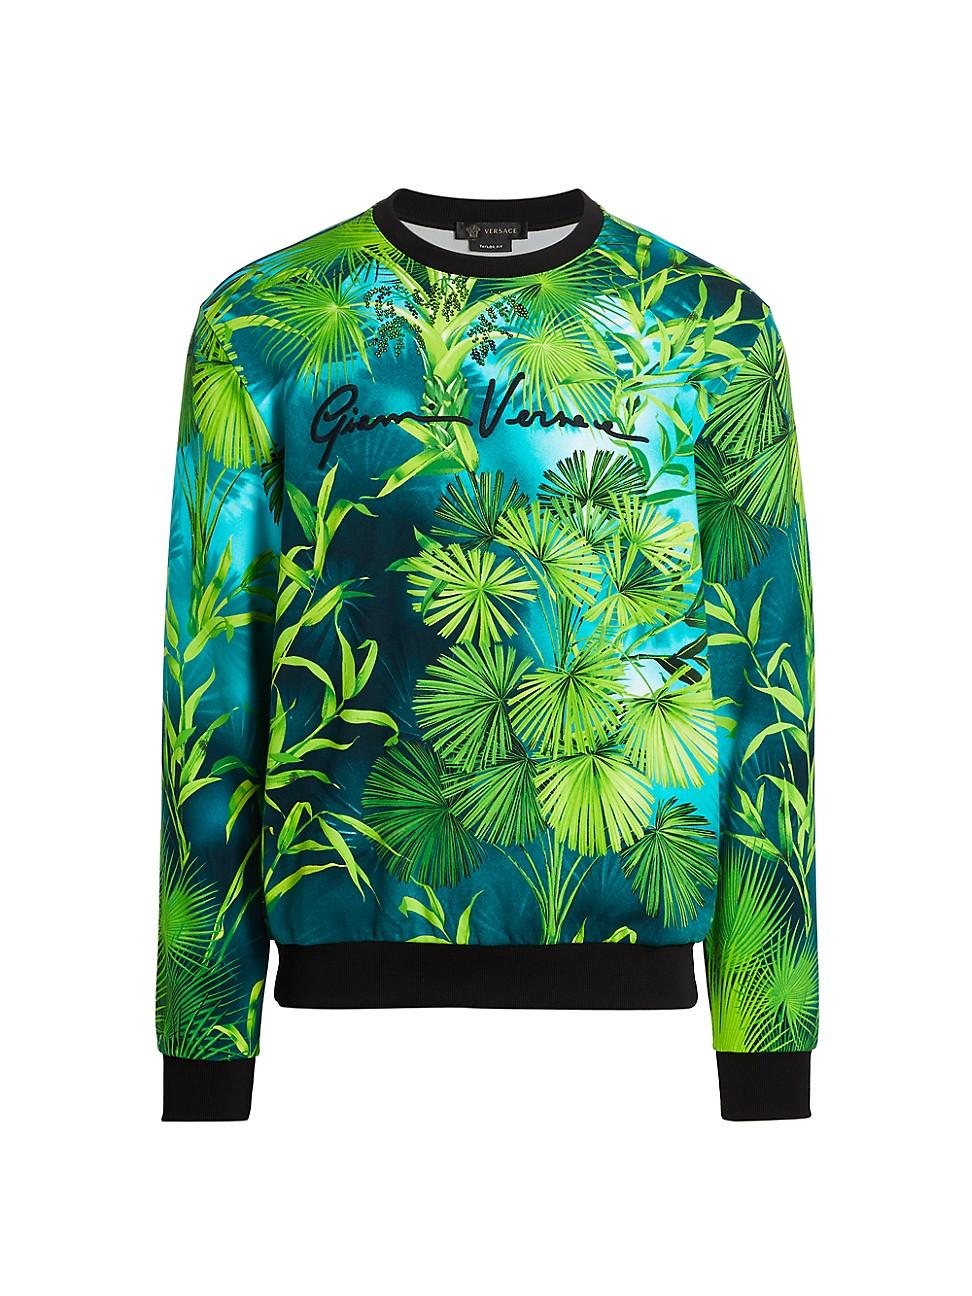 Versace Cotton Jungle-print Logo Sweatshirt in Green for Men - Lyst